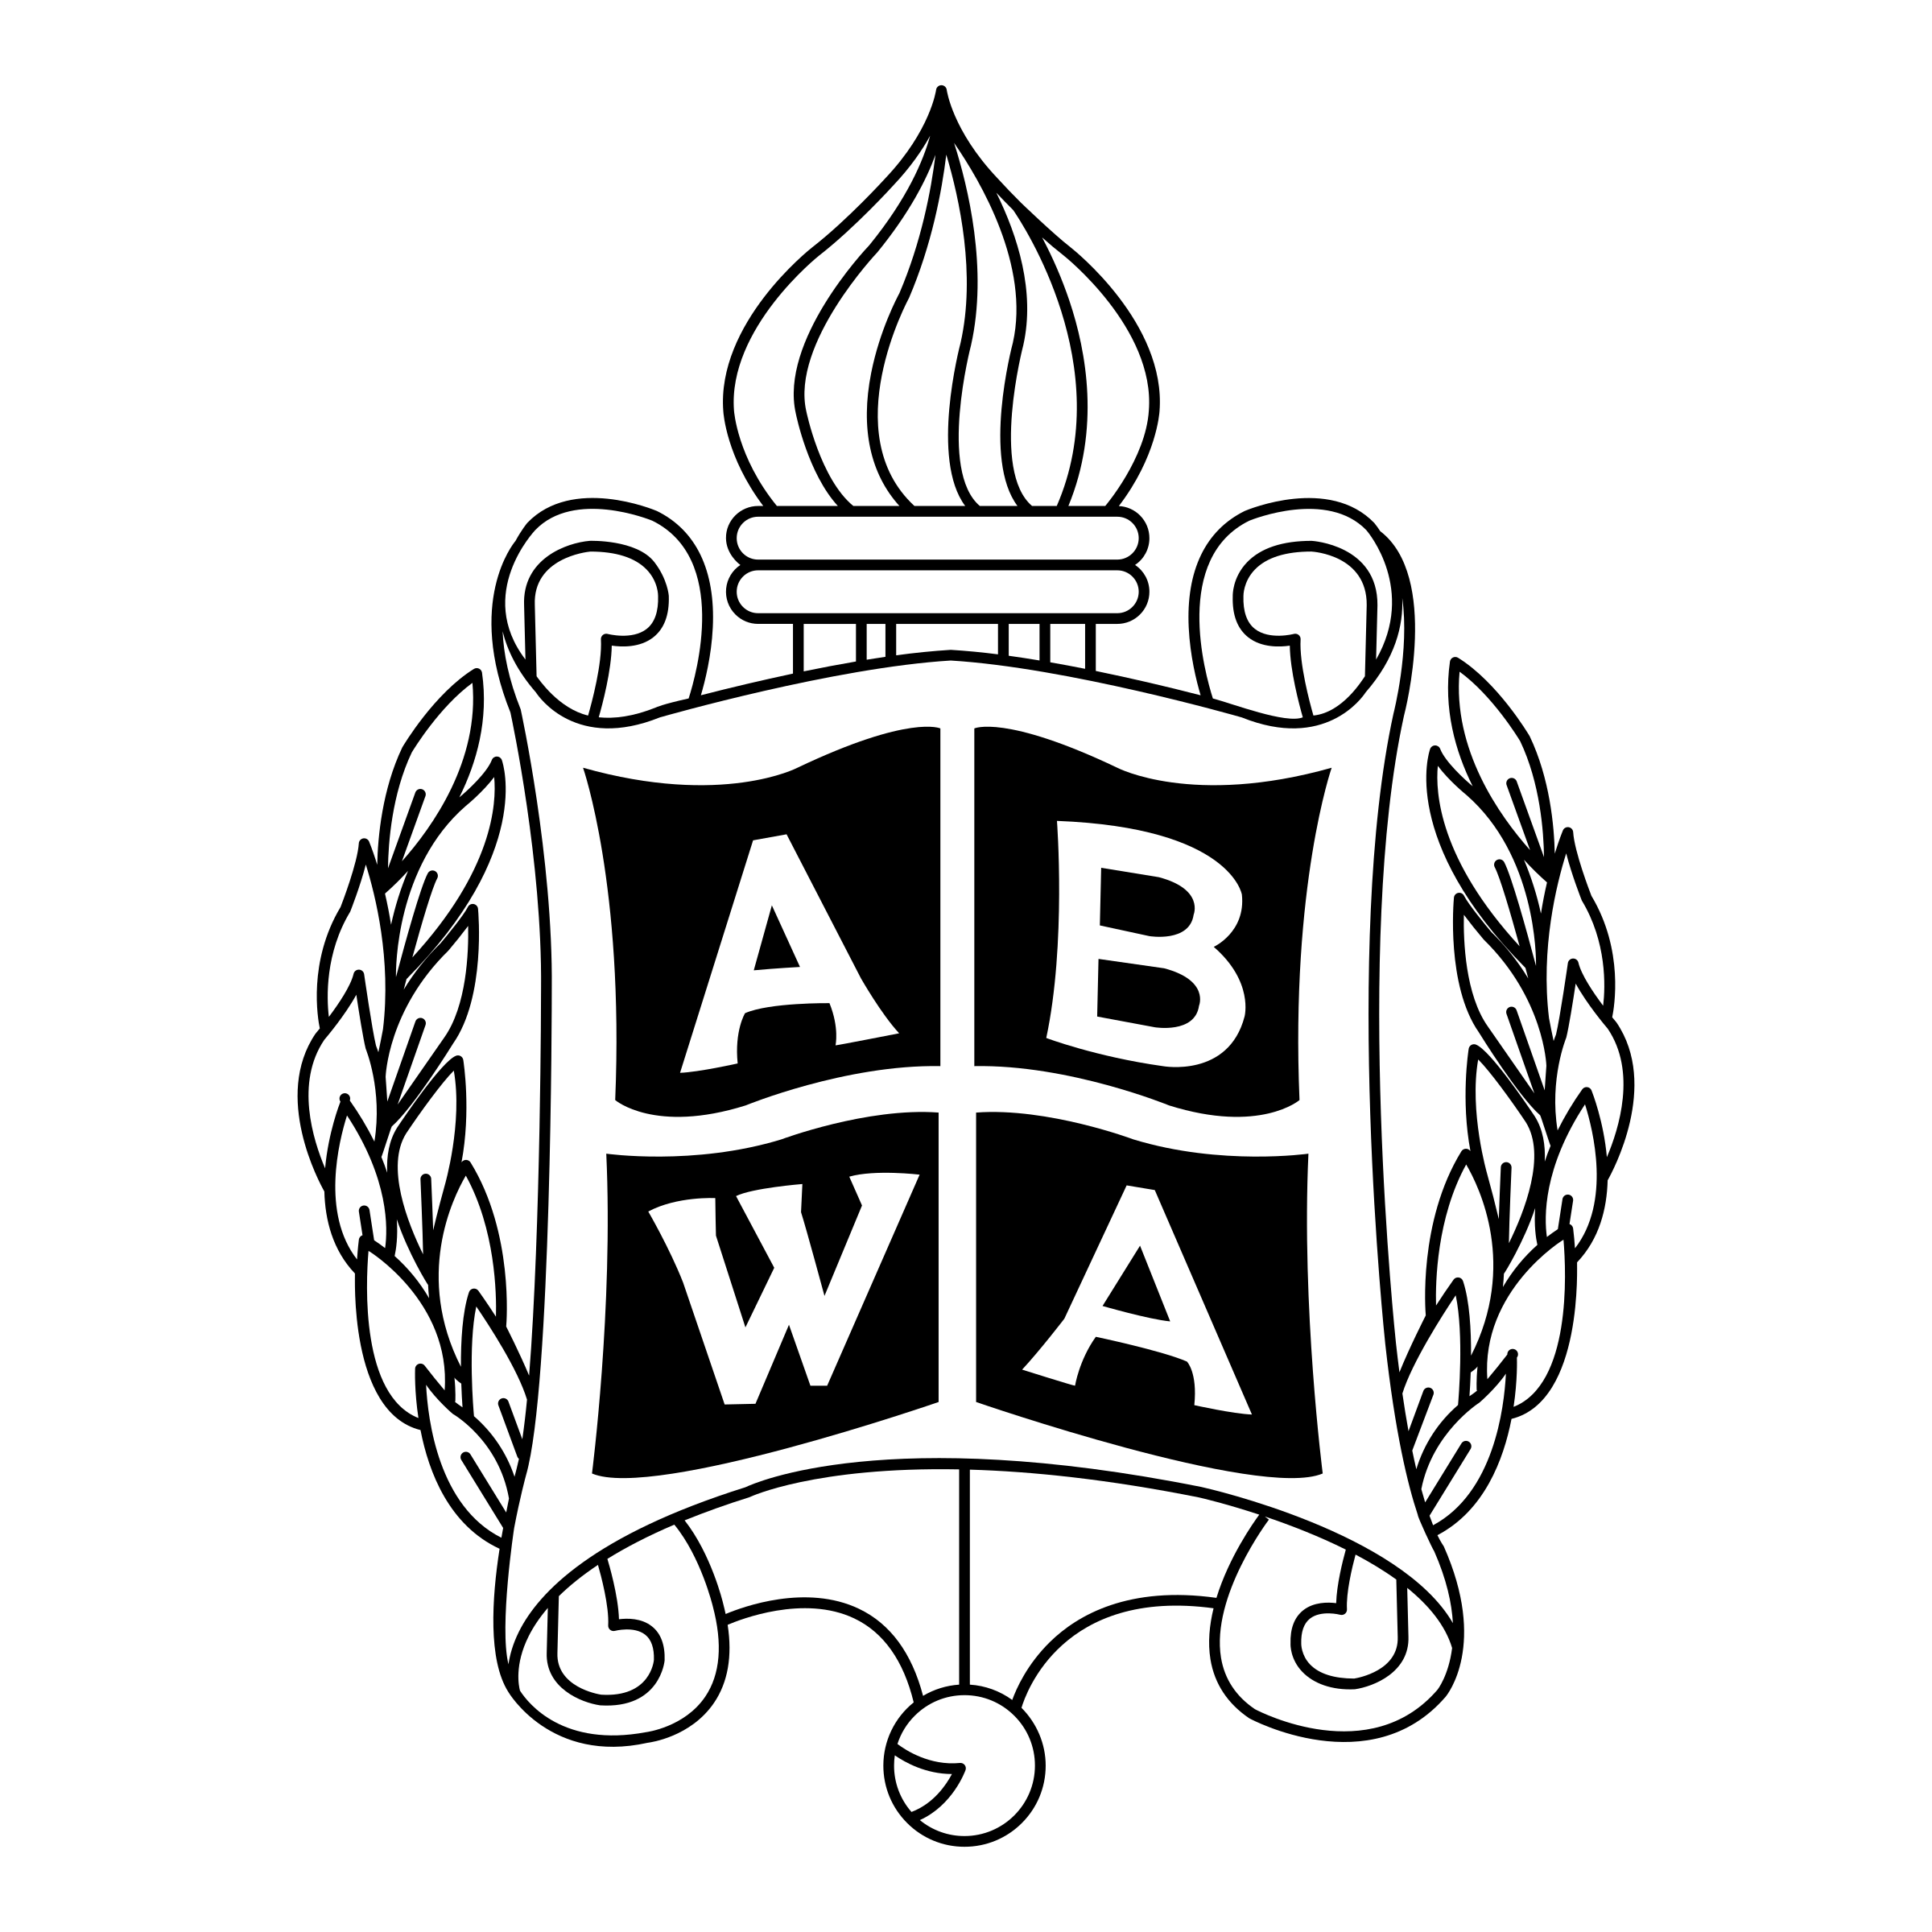 ABWA Logo - ABWA Logo PNG Transparent & SVG Vector